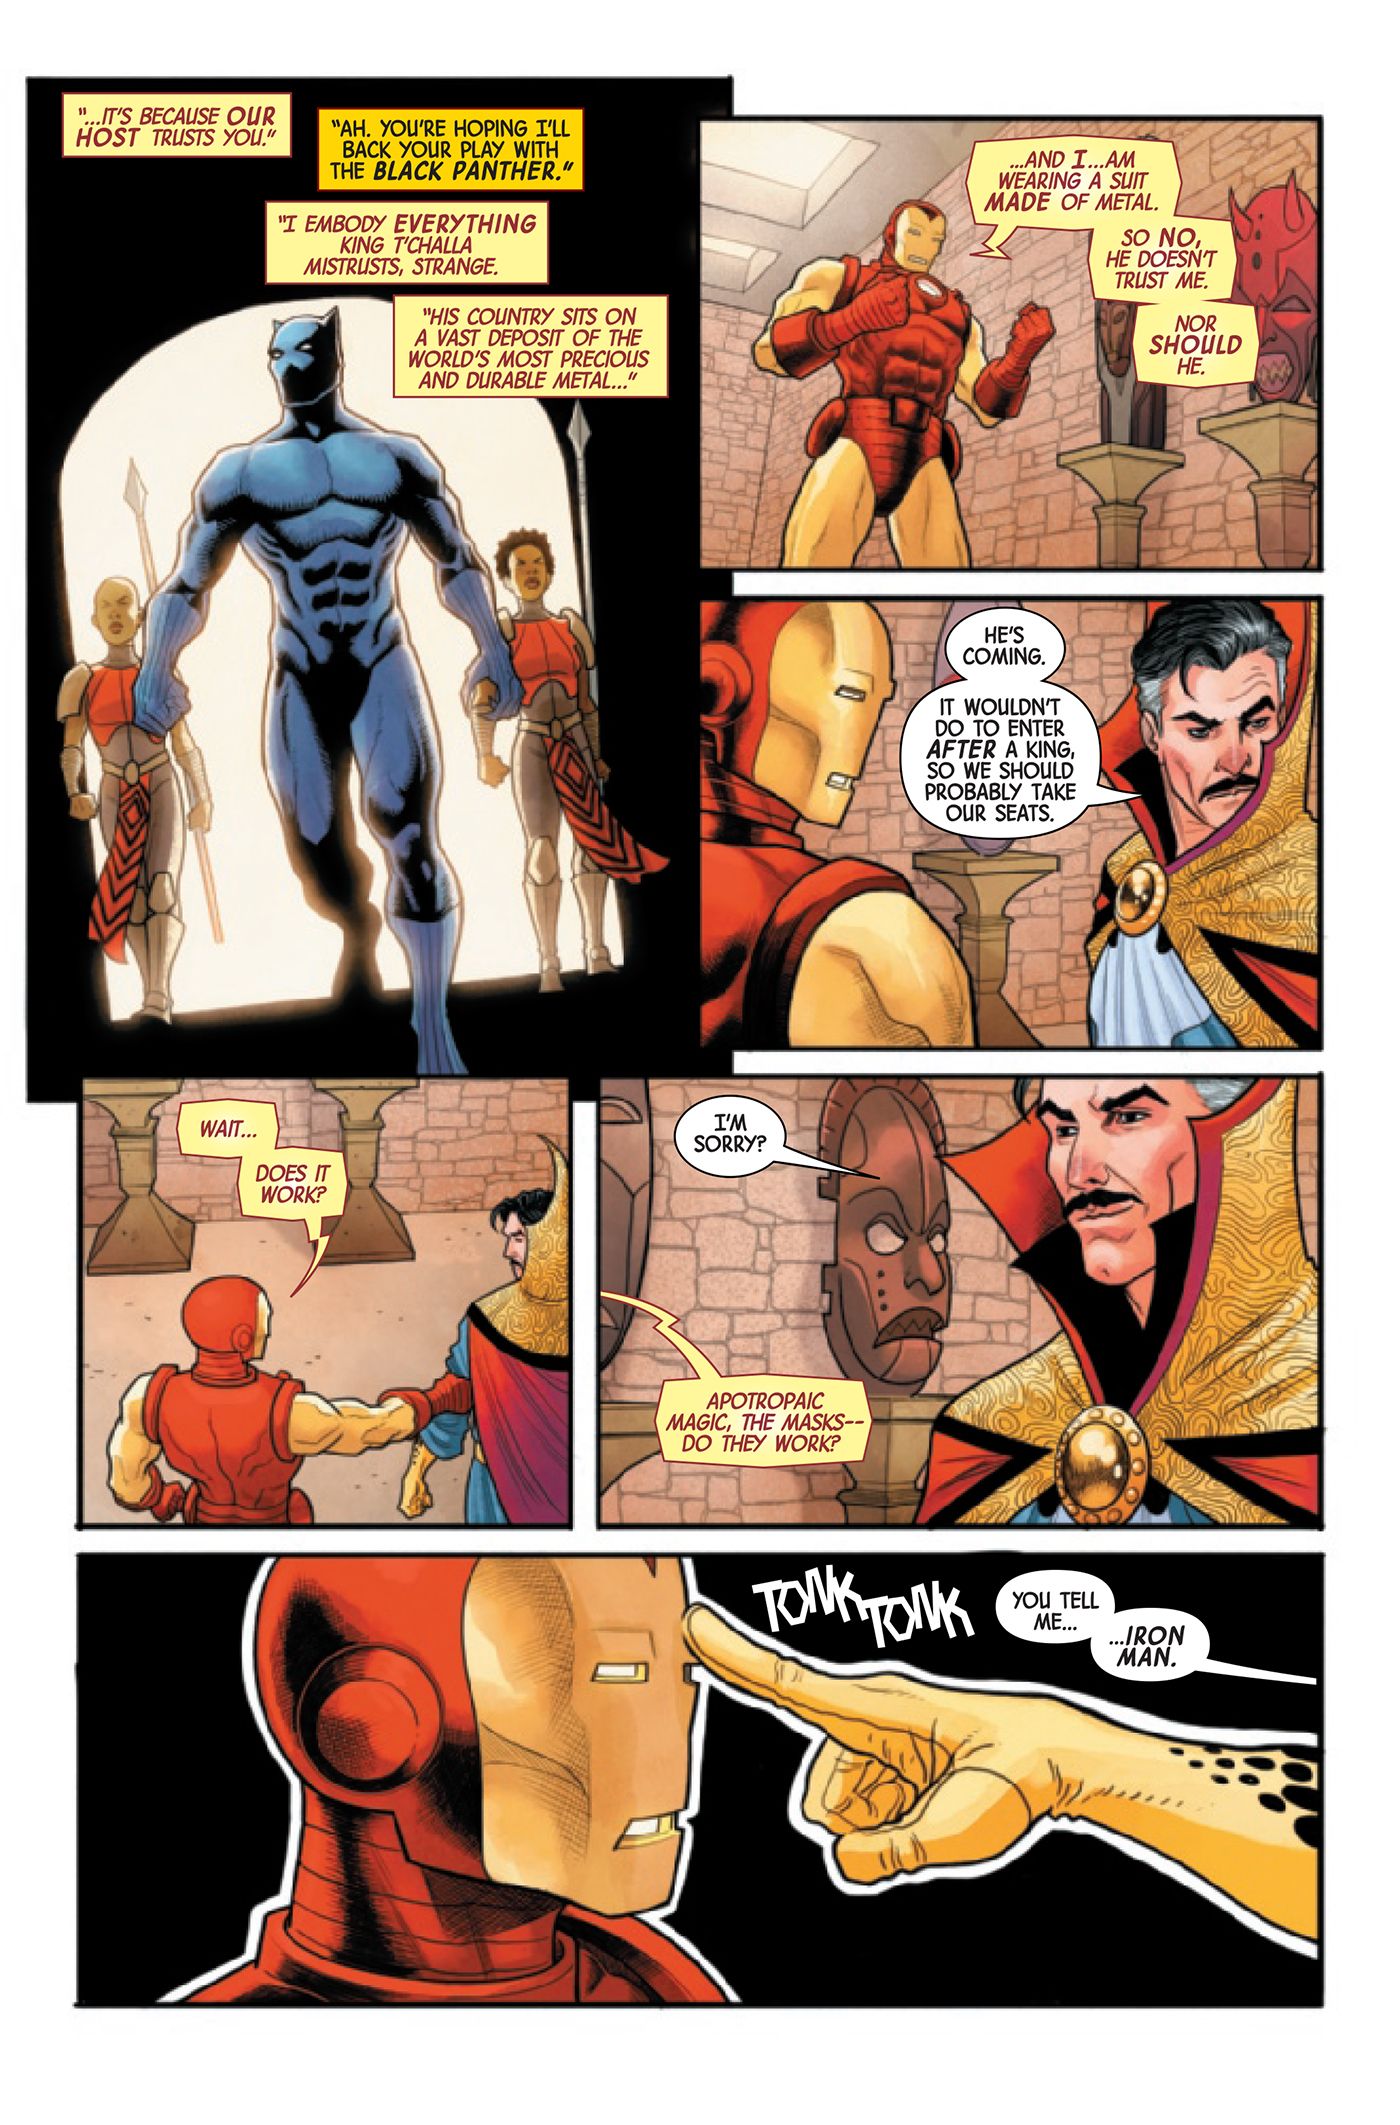 Black Panther arrives as Strange teases Tony's suit.